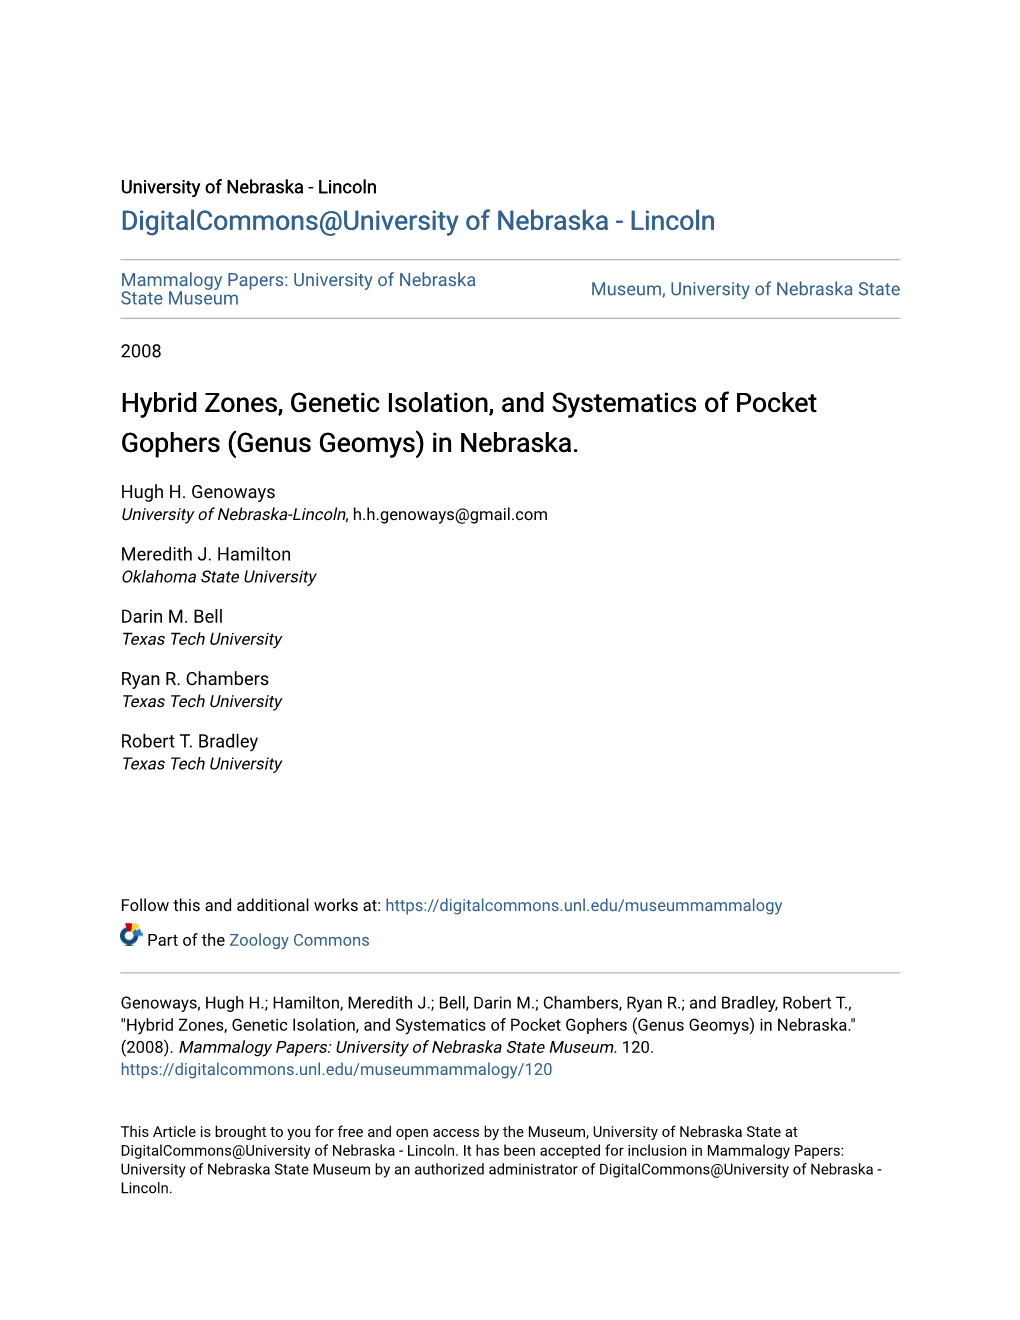 Hybrid Zones, Genetic Isolation, and Systematics of Pocket Gophers (Genus Geomys) in Nebraska